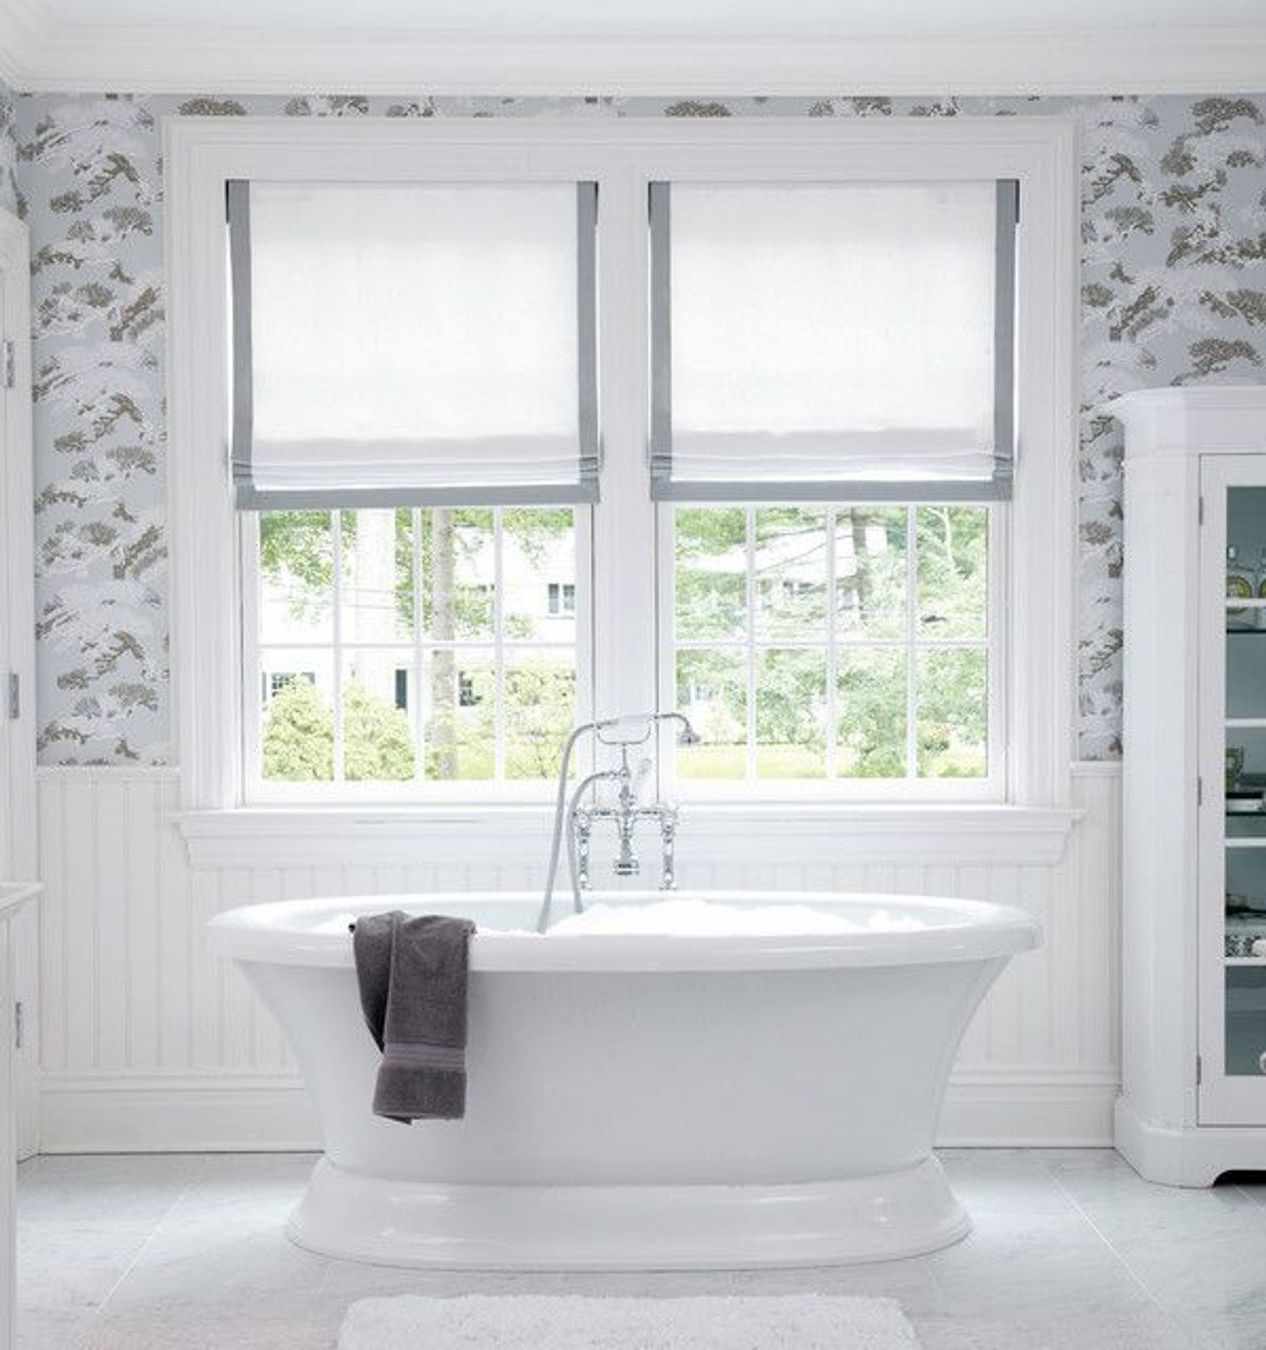 Grey Bathroom Curtains Nice White And Grey Roman Shades For Bathrooms Windows Treatment Image 